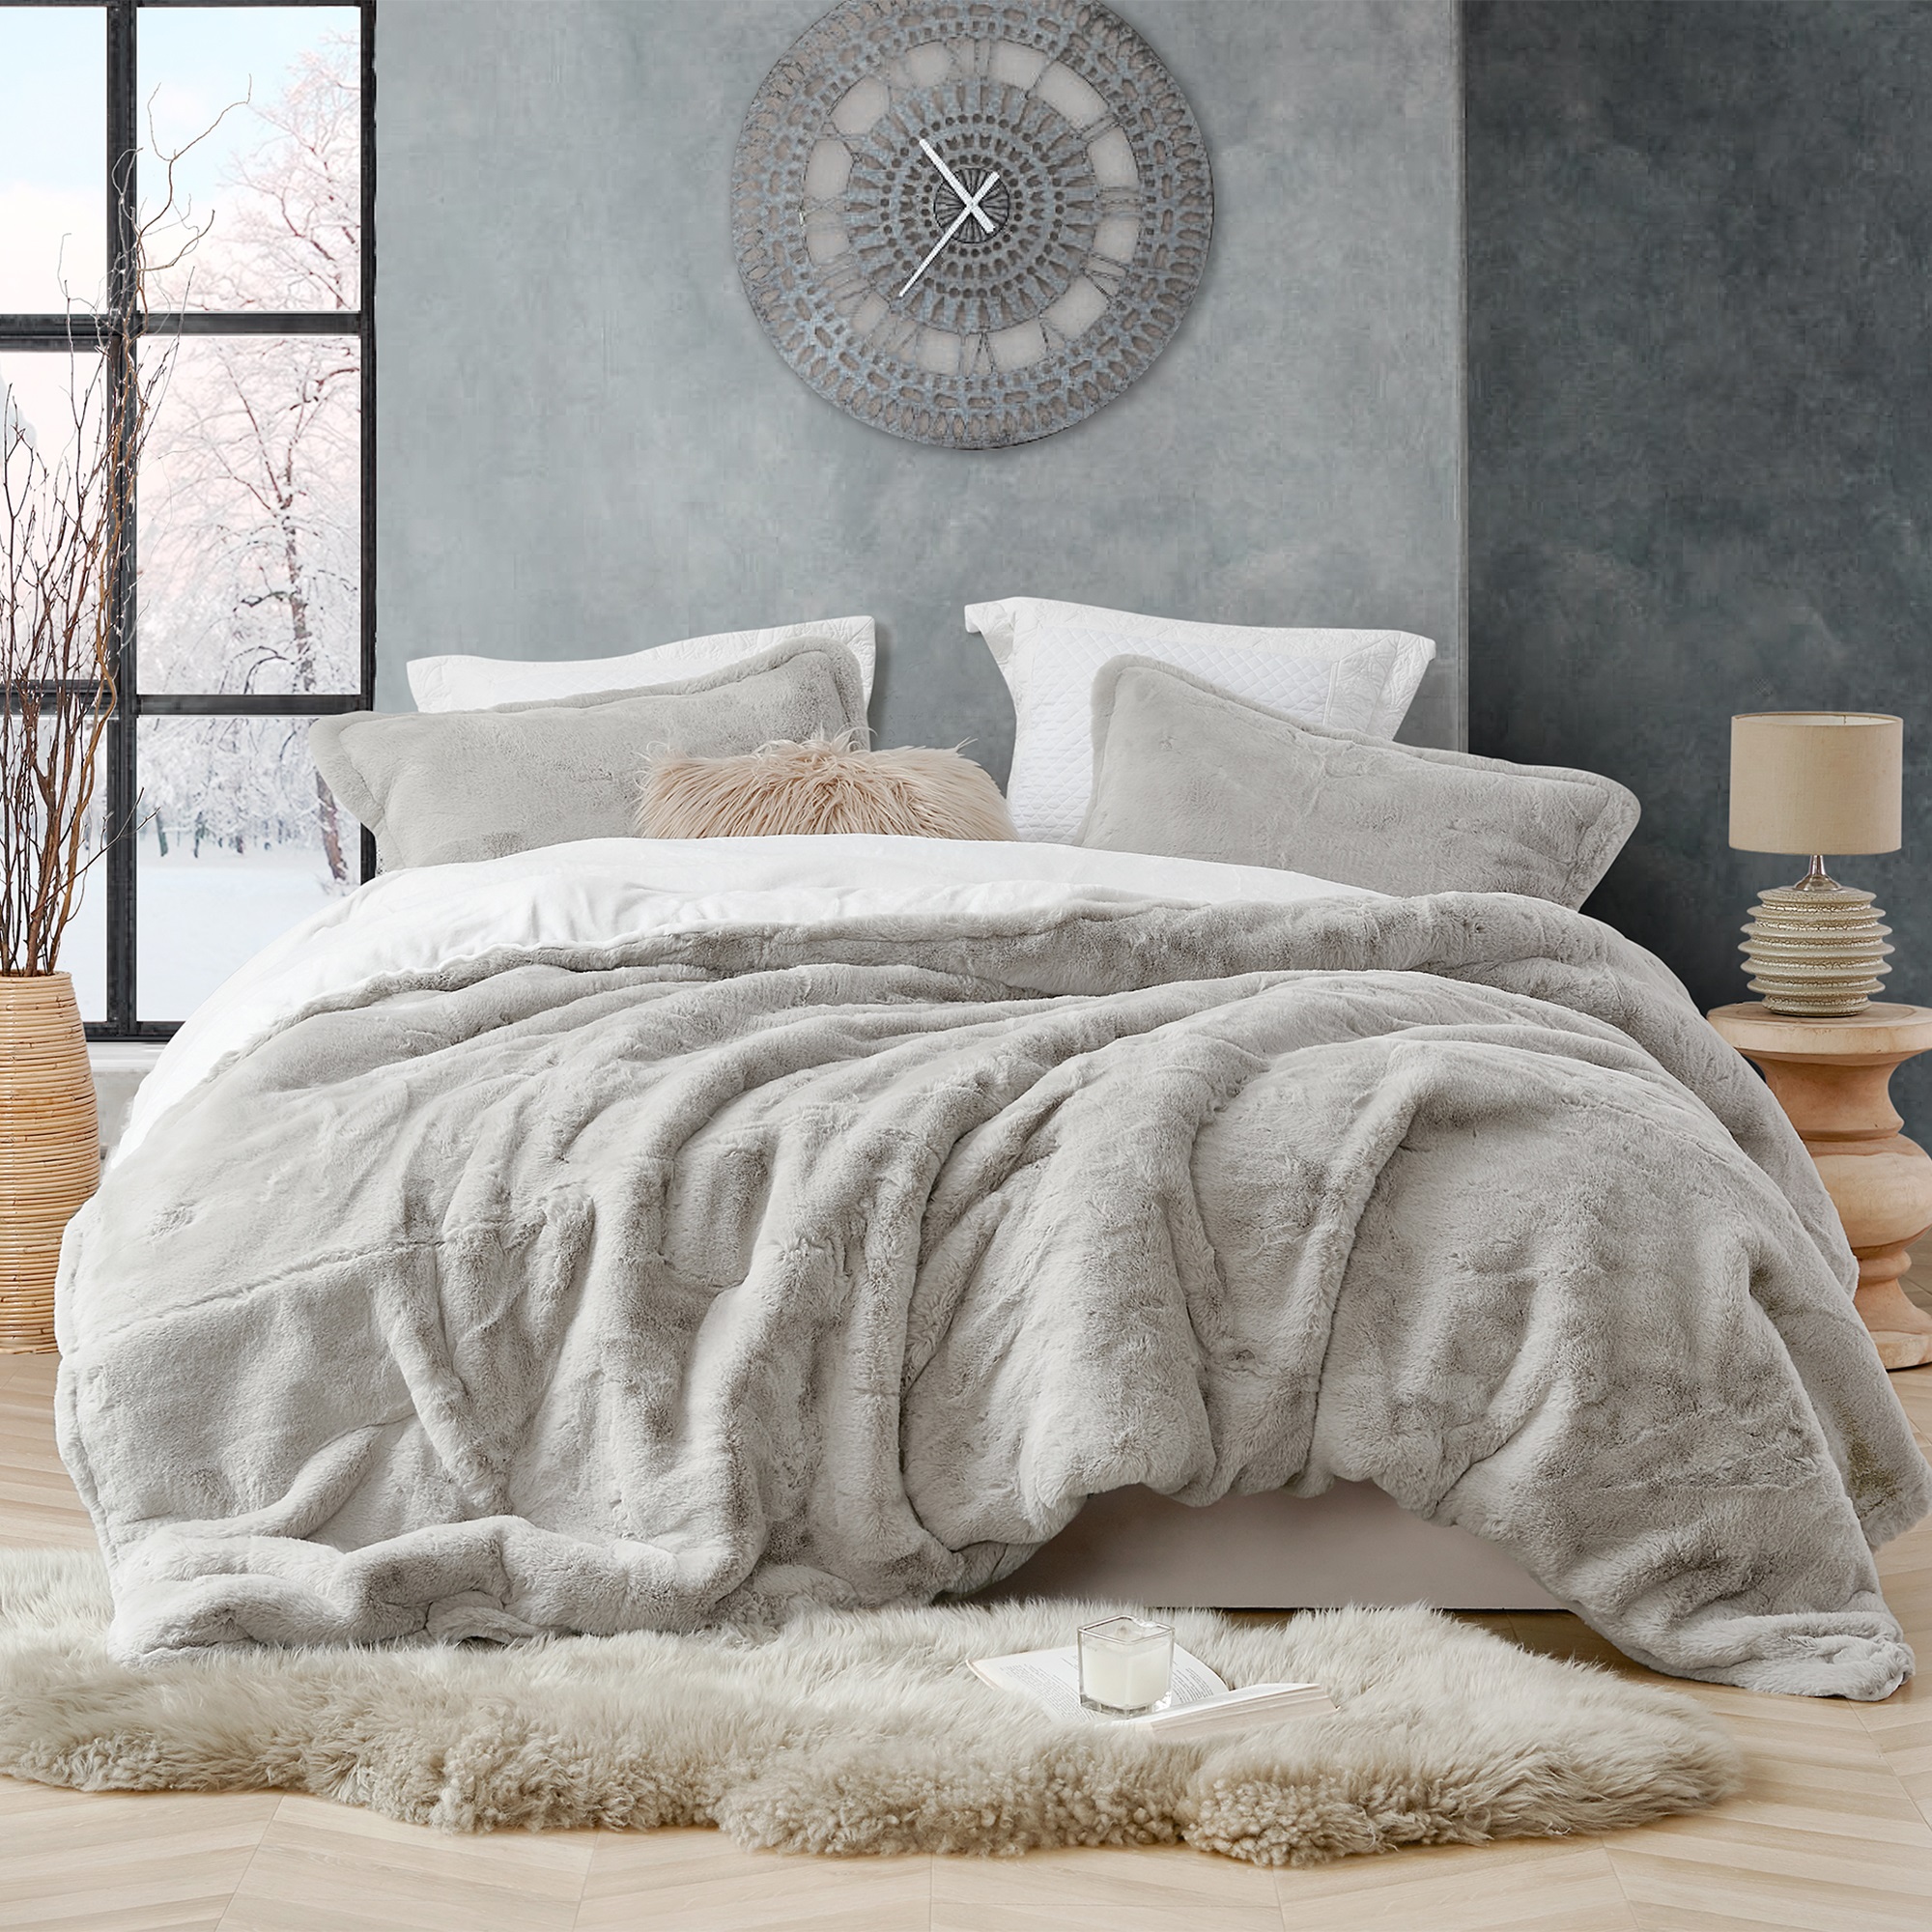 Coma Inducer Oversized Comforter - Chunky Bunny - Stone Taupe